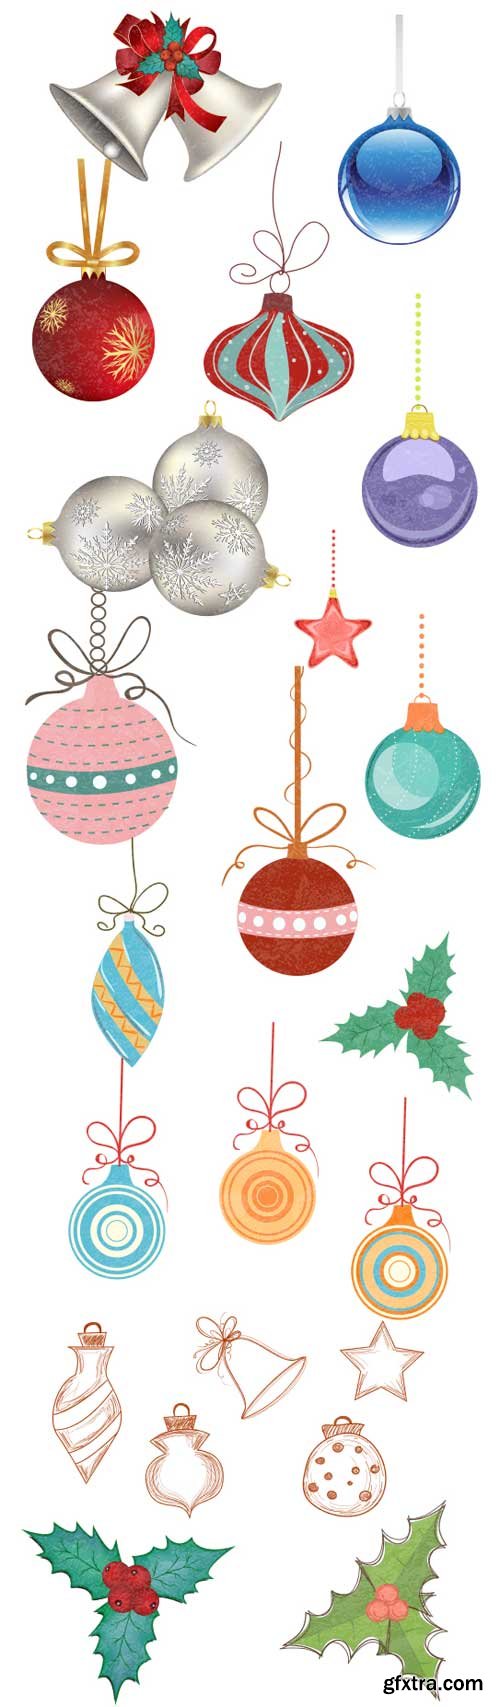 Christmas tree ornaments - Stock Vector